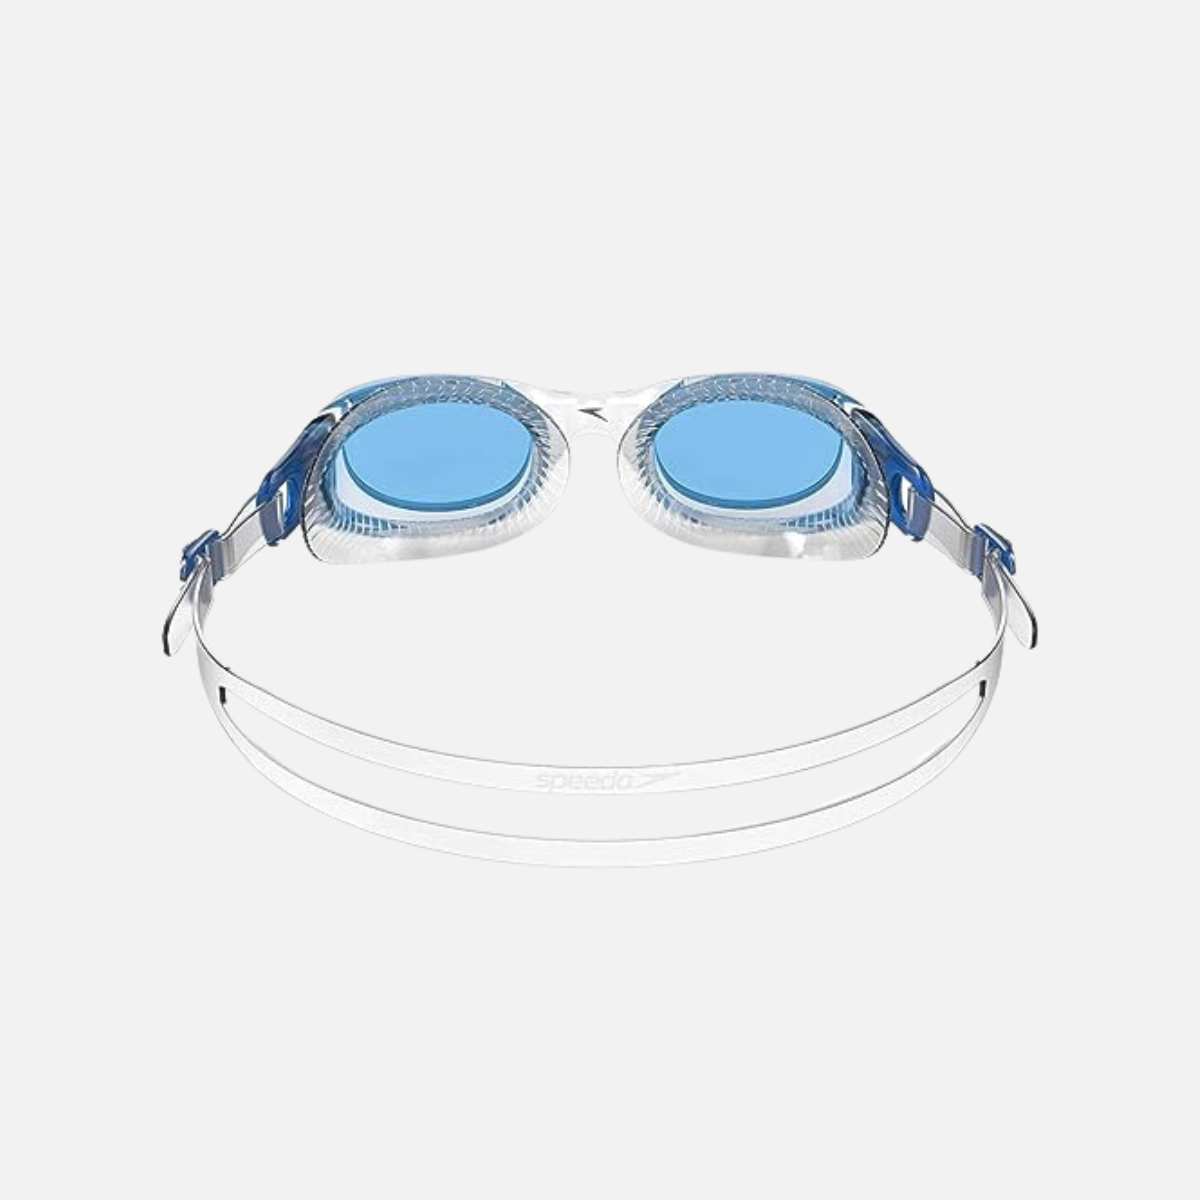 Speedo Futura Classic Adult Goggles -Blue/Clear